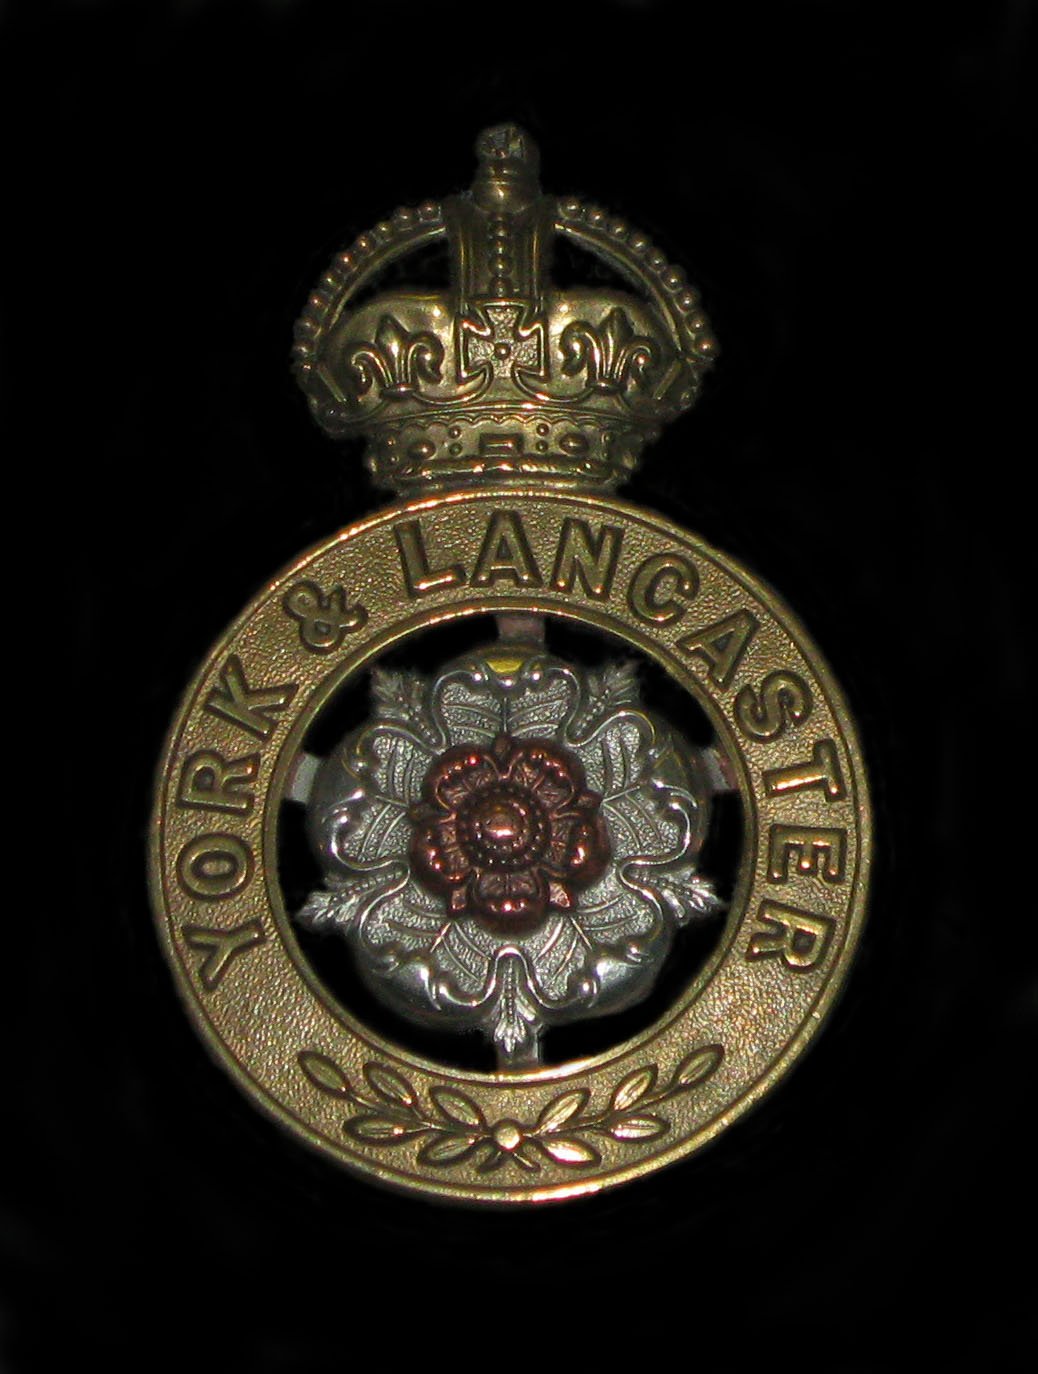 Regular Battalion Other Ranks  Glengarry Badge 1902 to 1904.